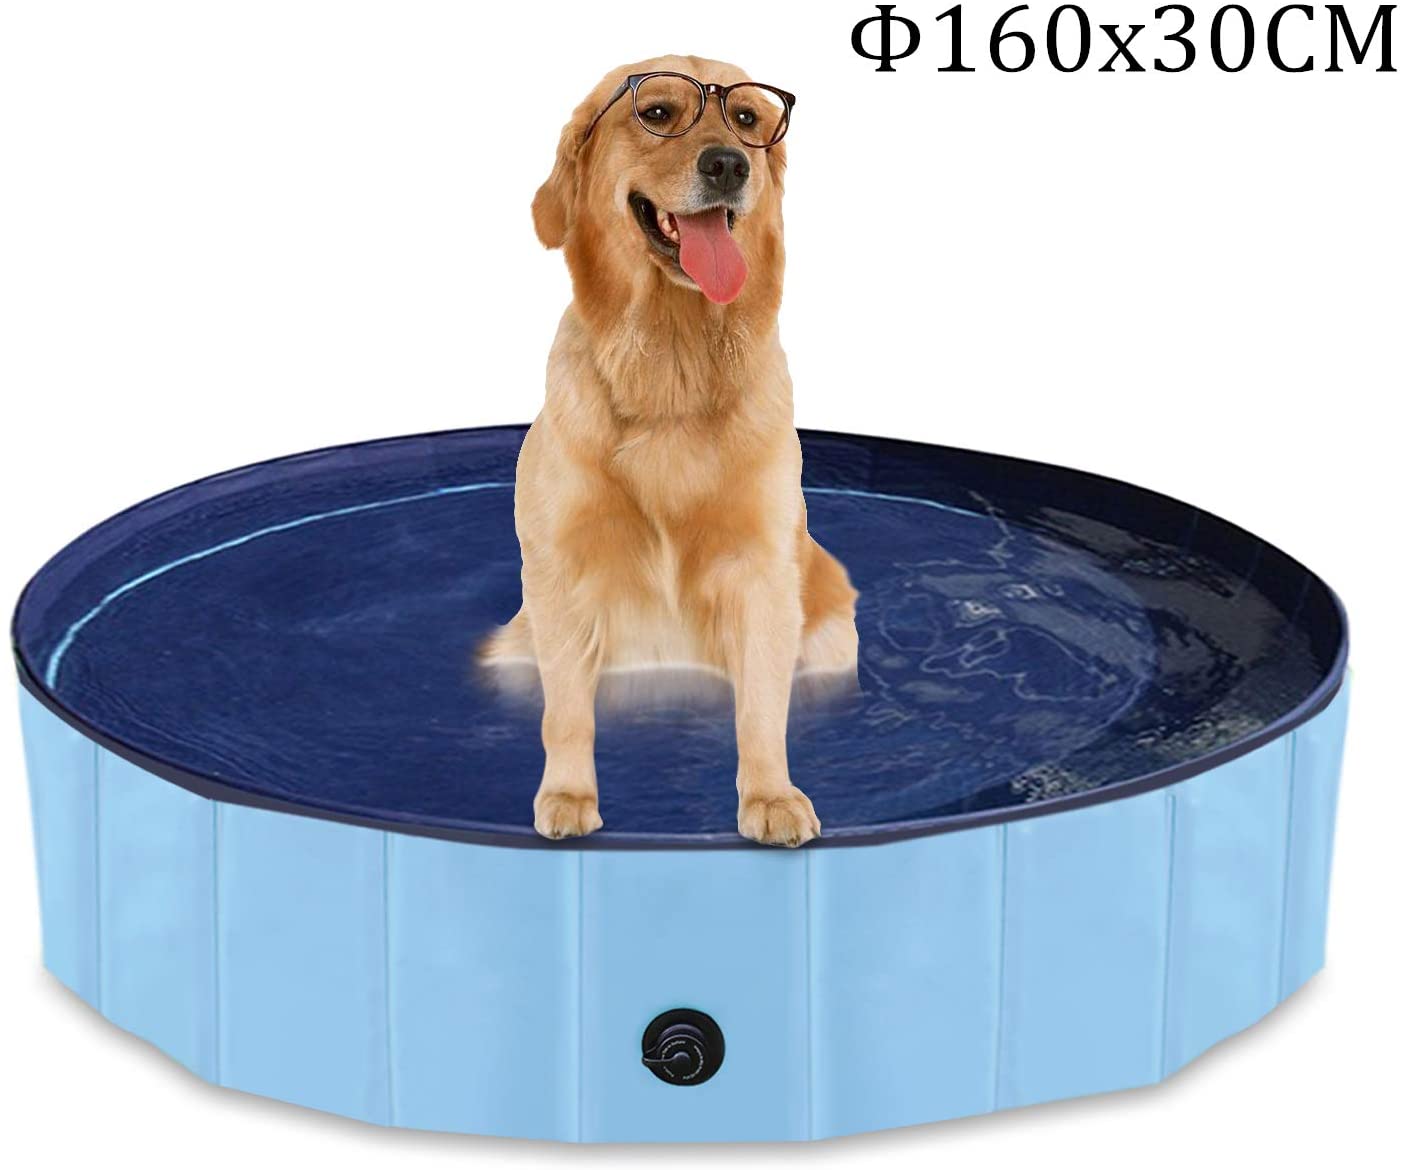  YAOBLUESEA Piscina para Perros, 160x30 CM Piscina para Perros Bañera Plegable para Mascotas - Gran/Azul 